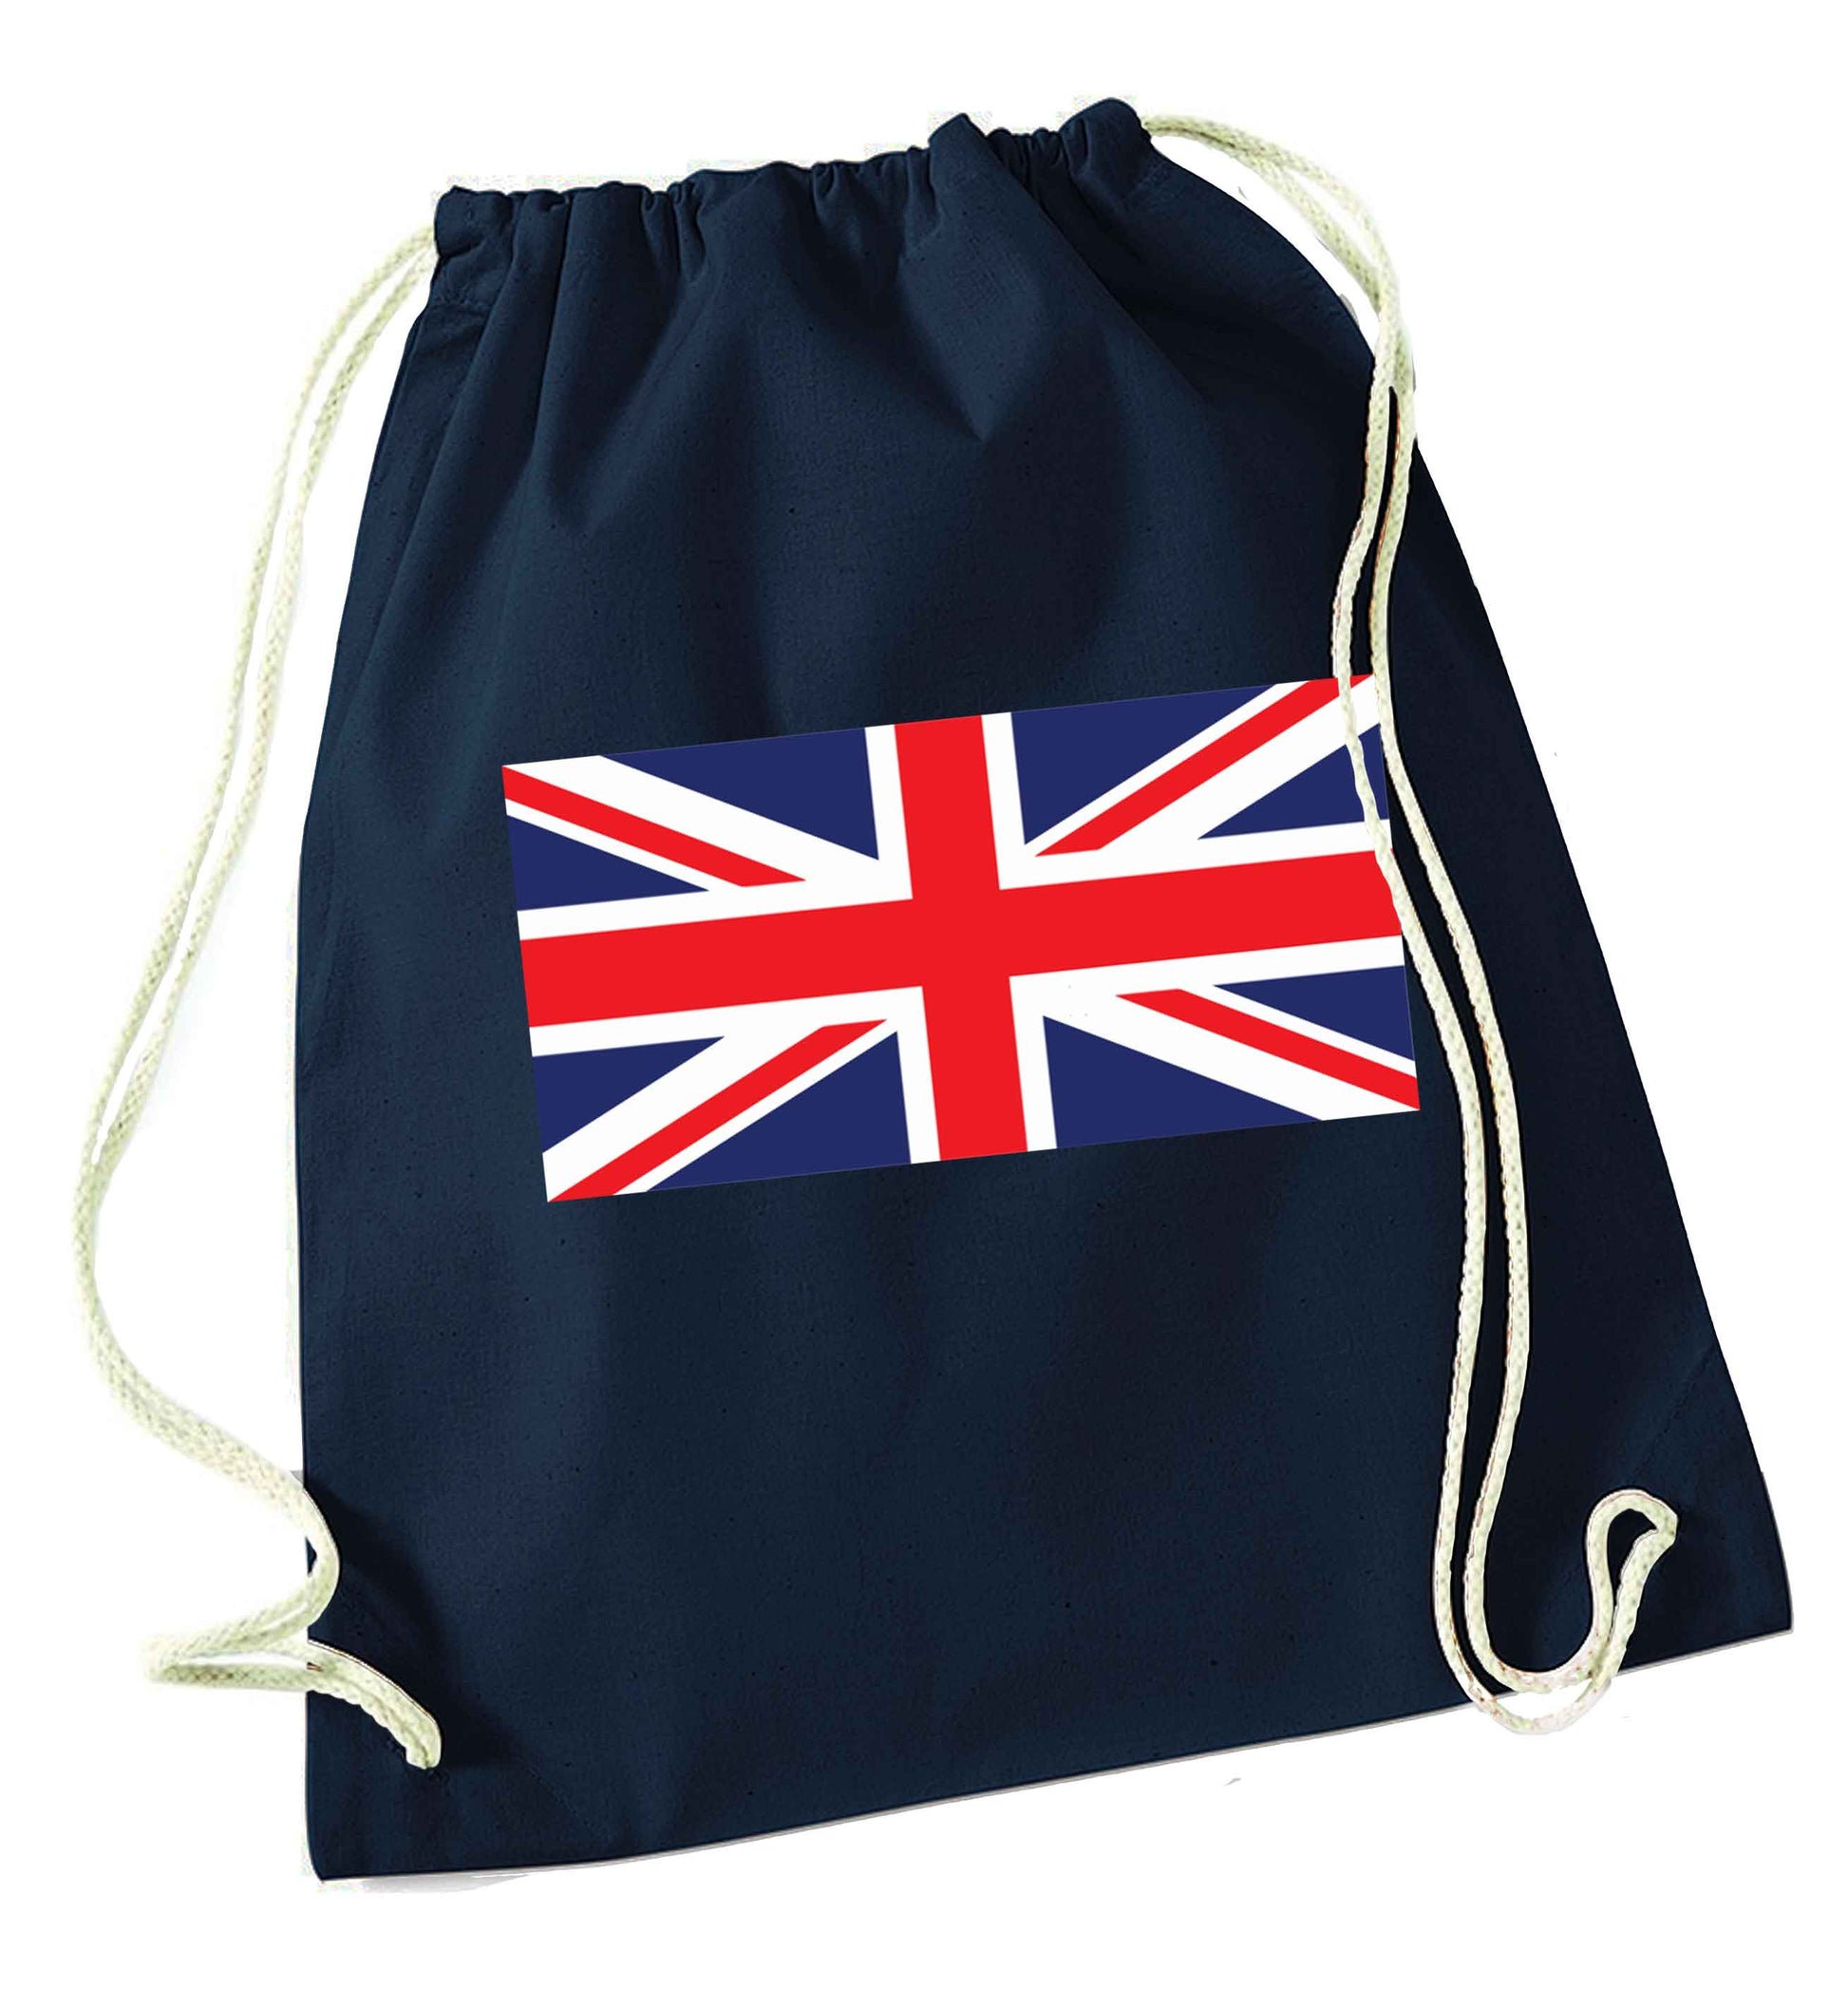 Union Jack navy drawstring bag